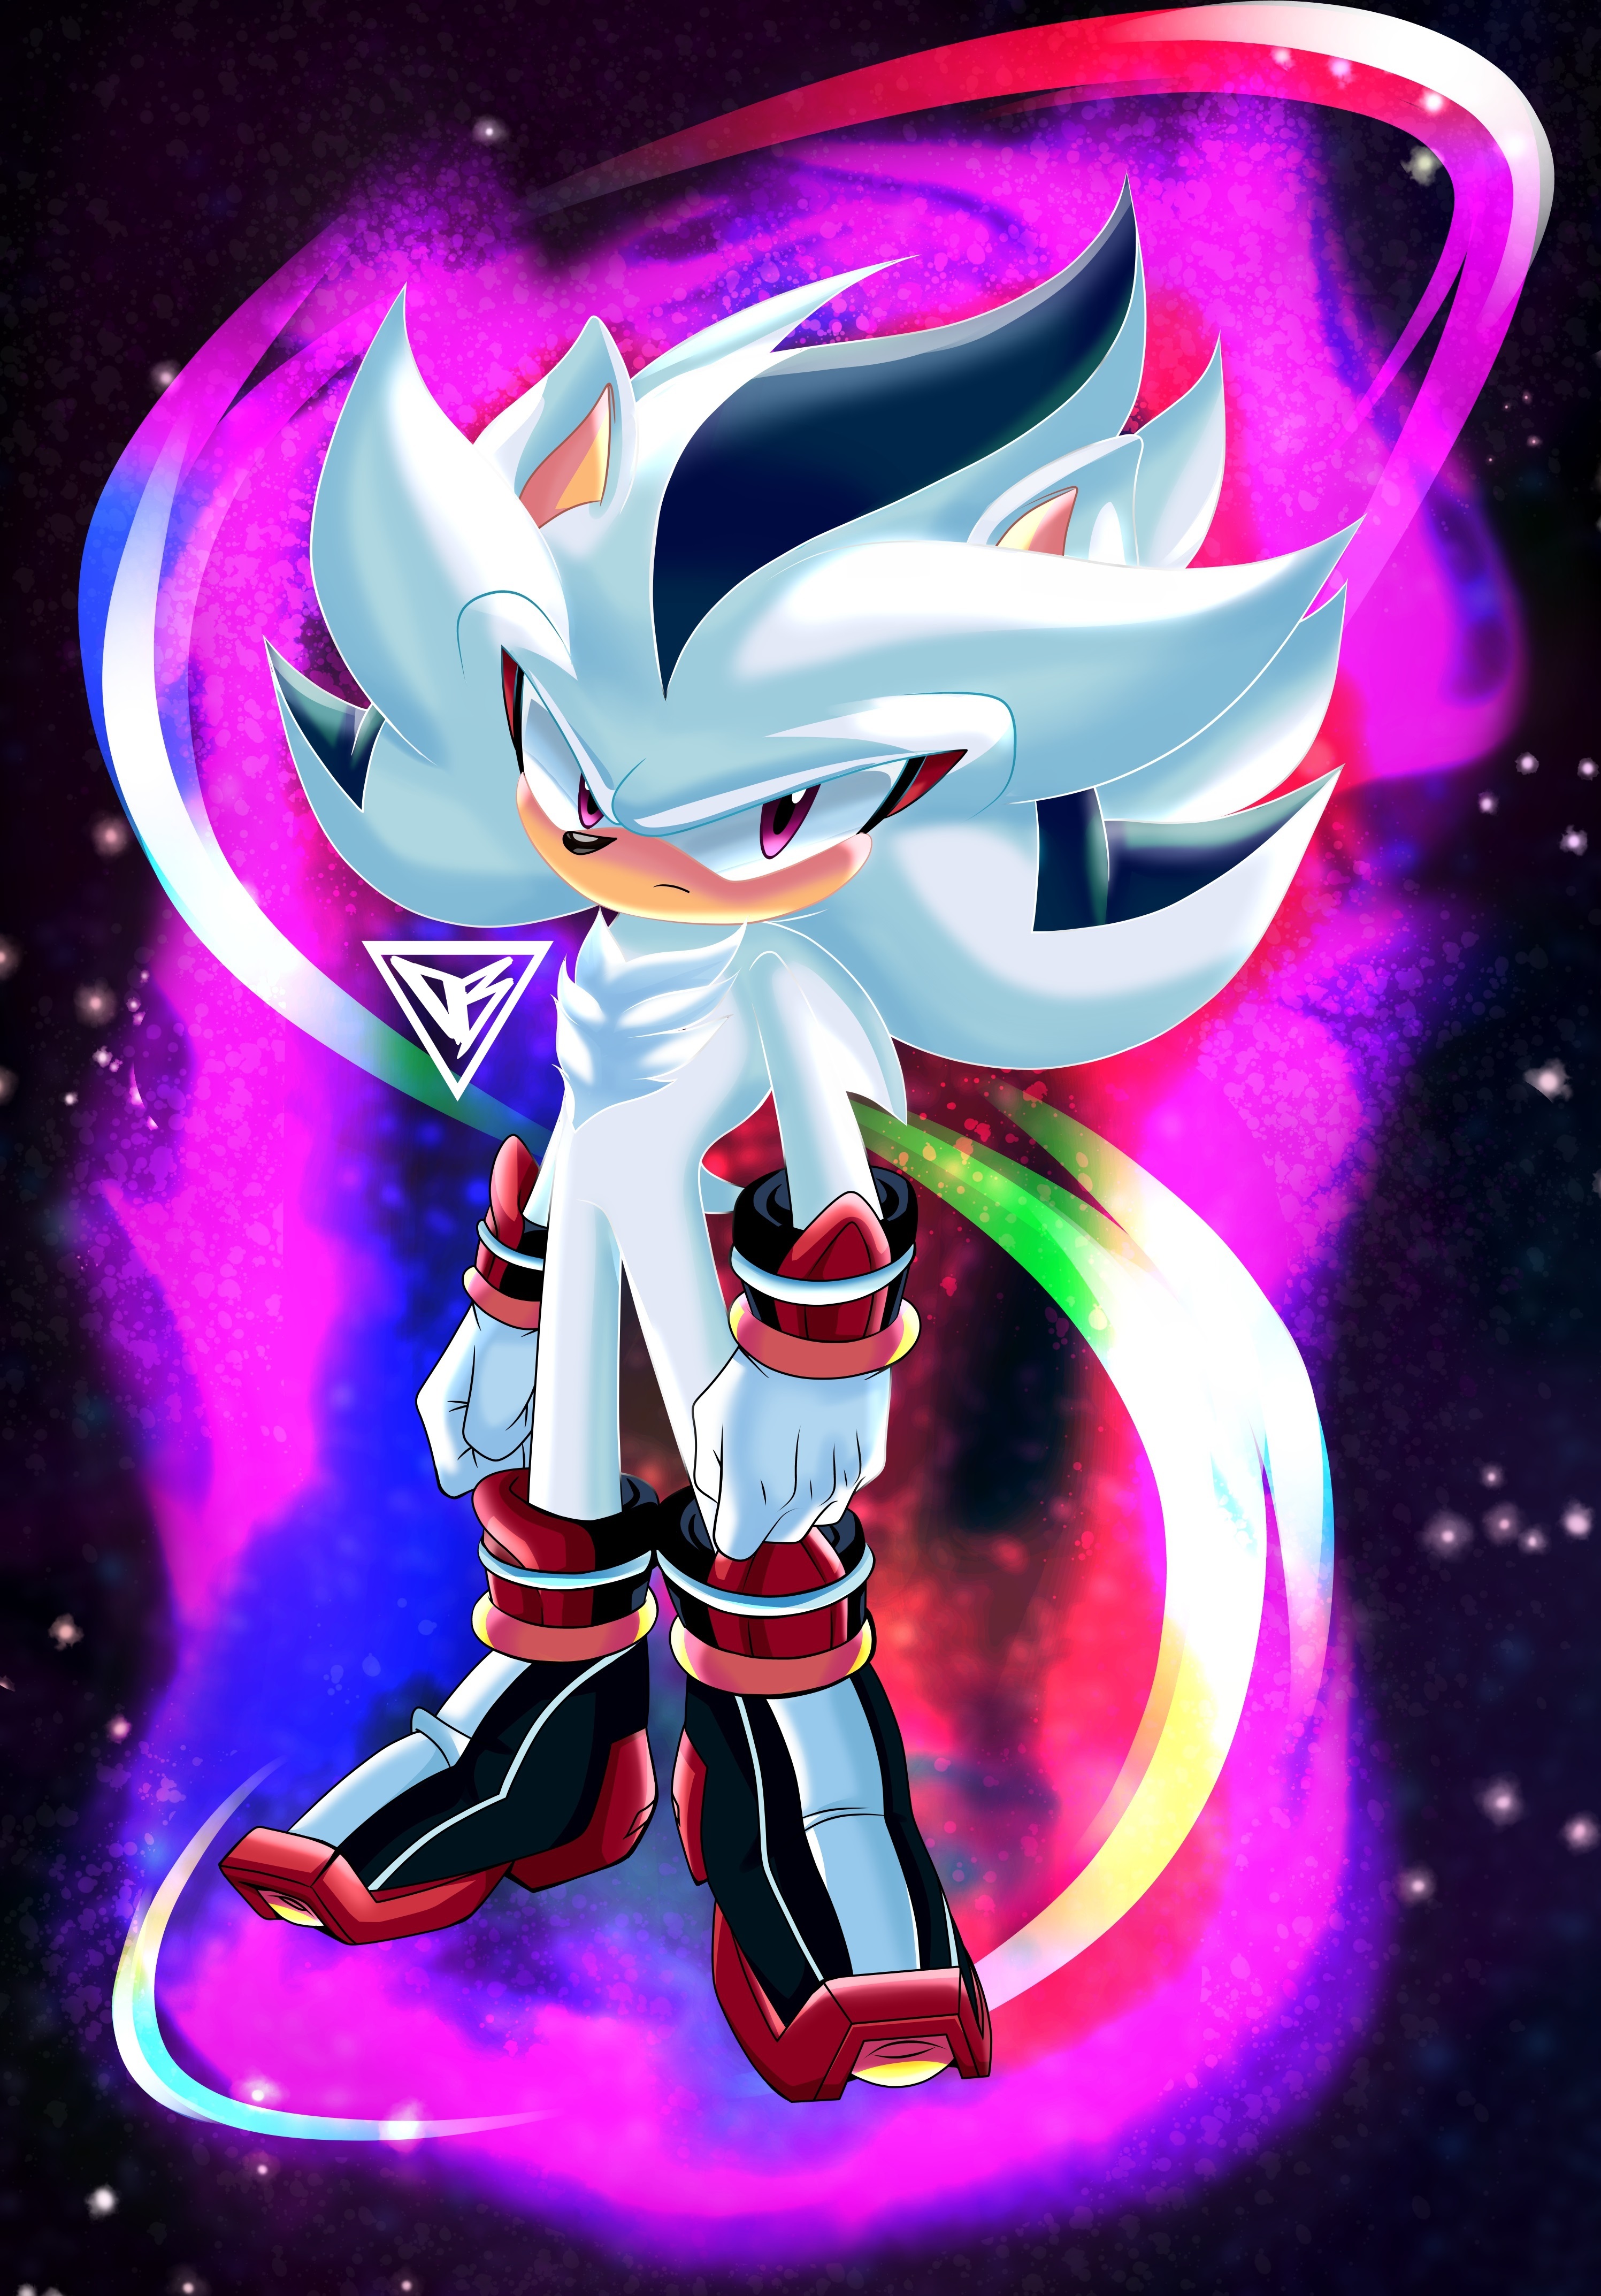 Sonadilver (Sonic Shadow Silver fusion) by TheLegendarySonic on DeviantArt